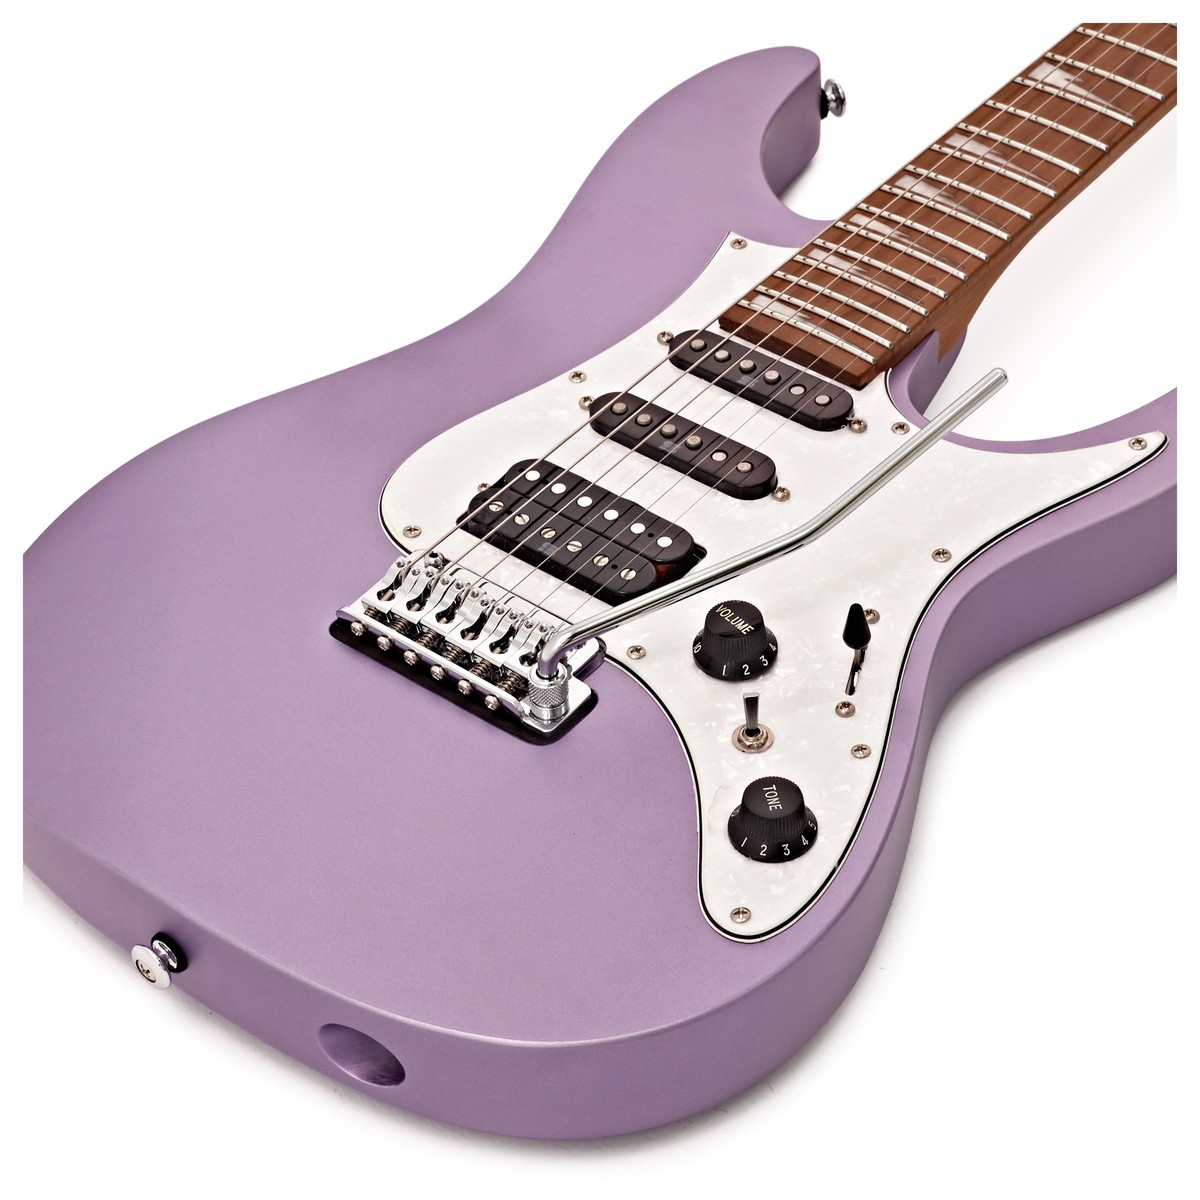 Ibanez Mario Camarena Mar10 Lmm Premium Signature Hss Trem Mn +housse - Lavender Metallic Matte - Str shape electric guitar - Variation 3